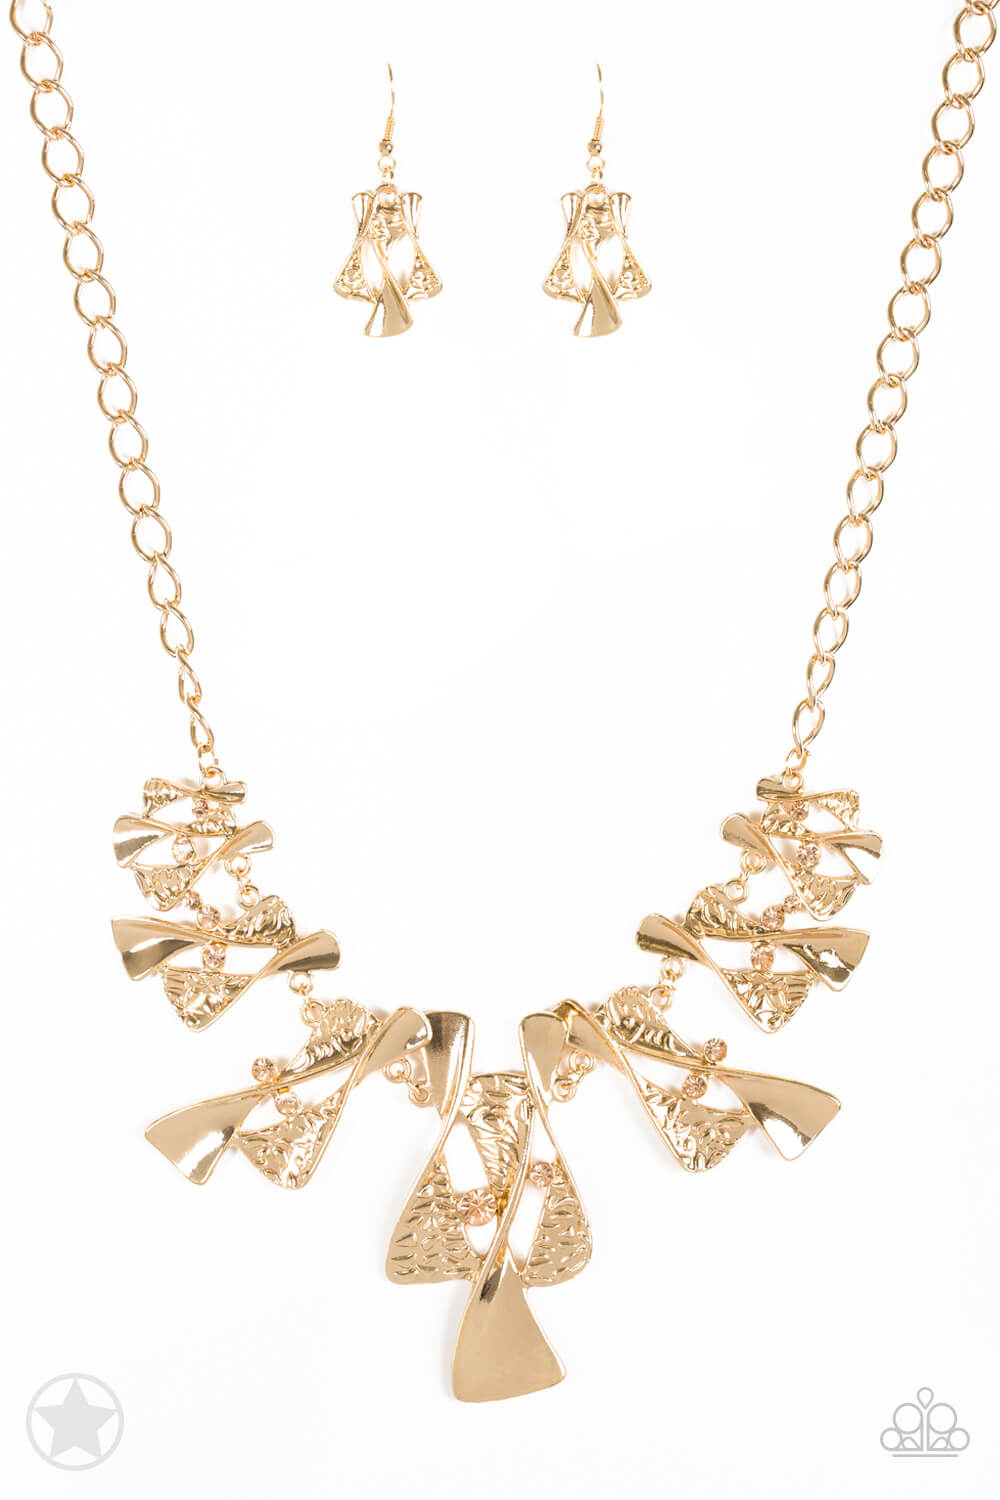 The Sands of Time Gold Necklace Set - Princess Glam Shop